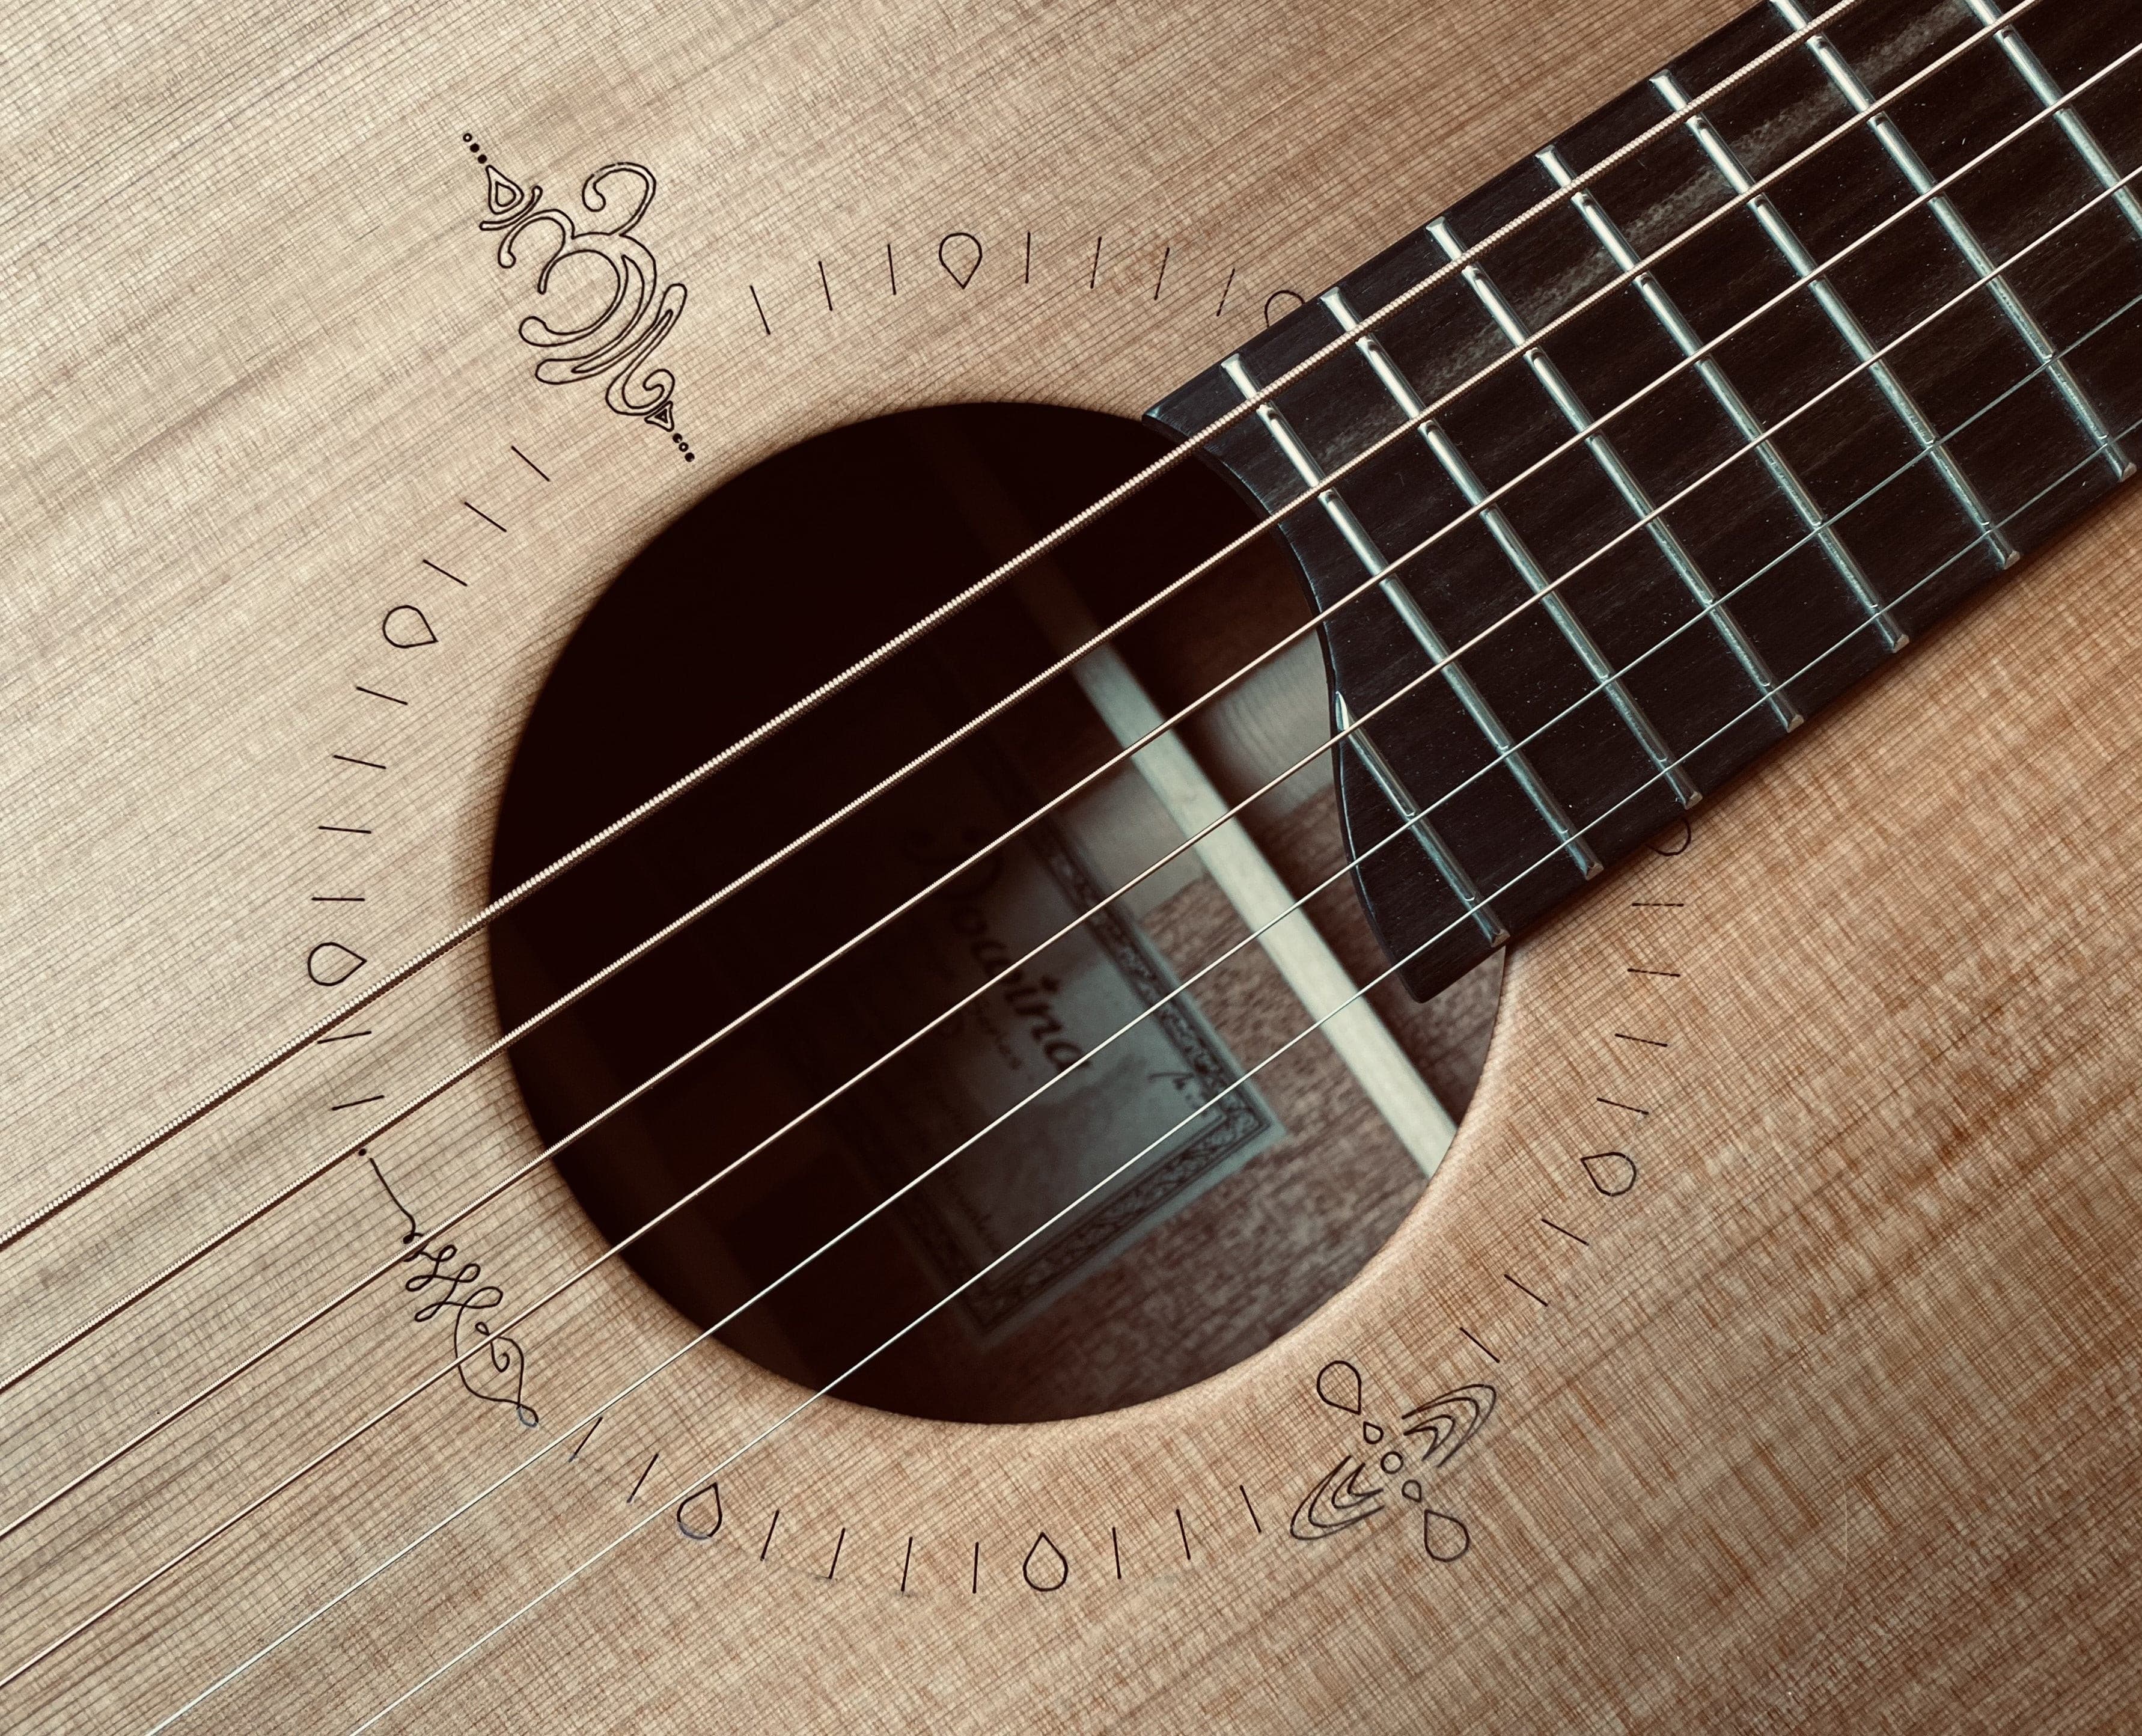 Dowina Pure Dreadnought 100% Handmade Custom Shop Acoustic Guitar From Slovakia **VERY special reduced price!**, Acoustic Guitar for sale at Richards Guitars.